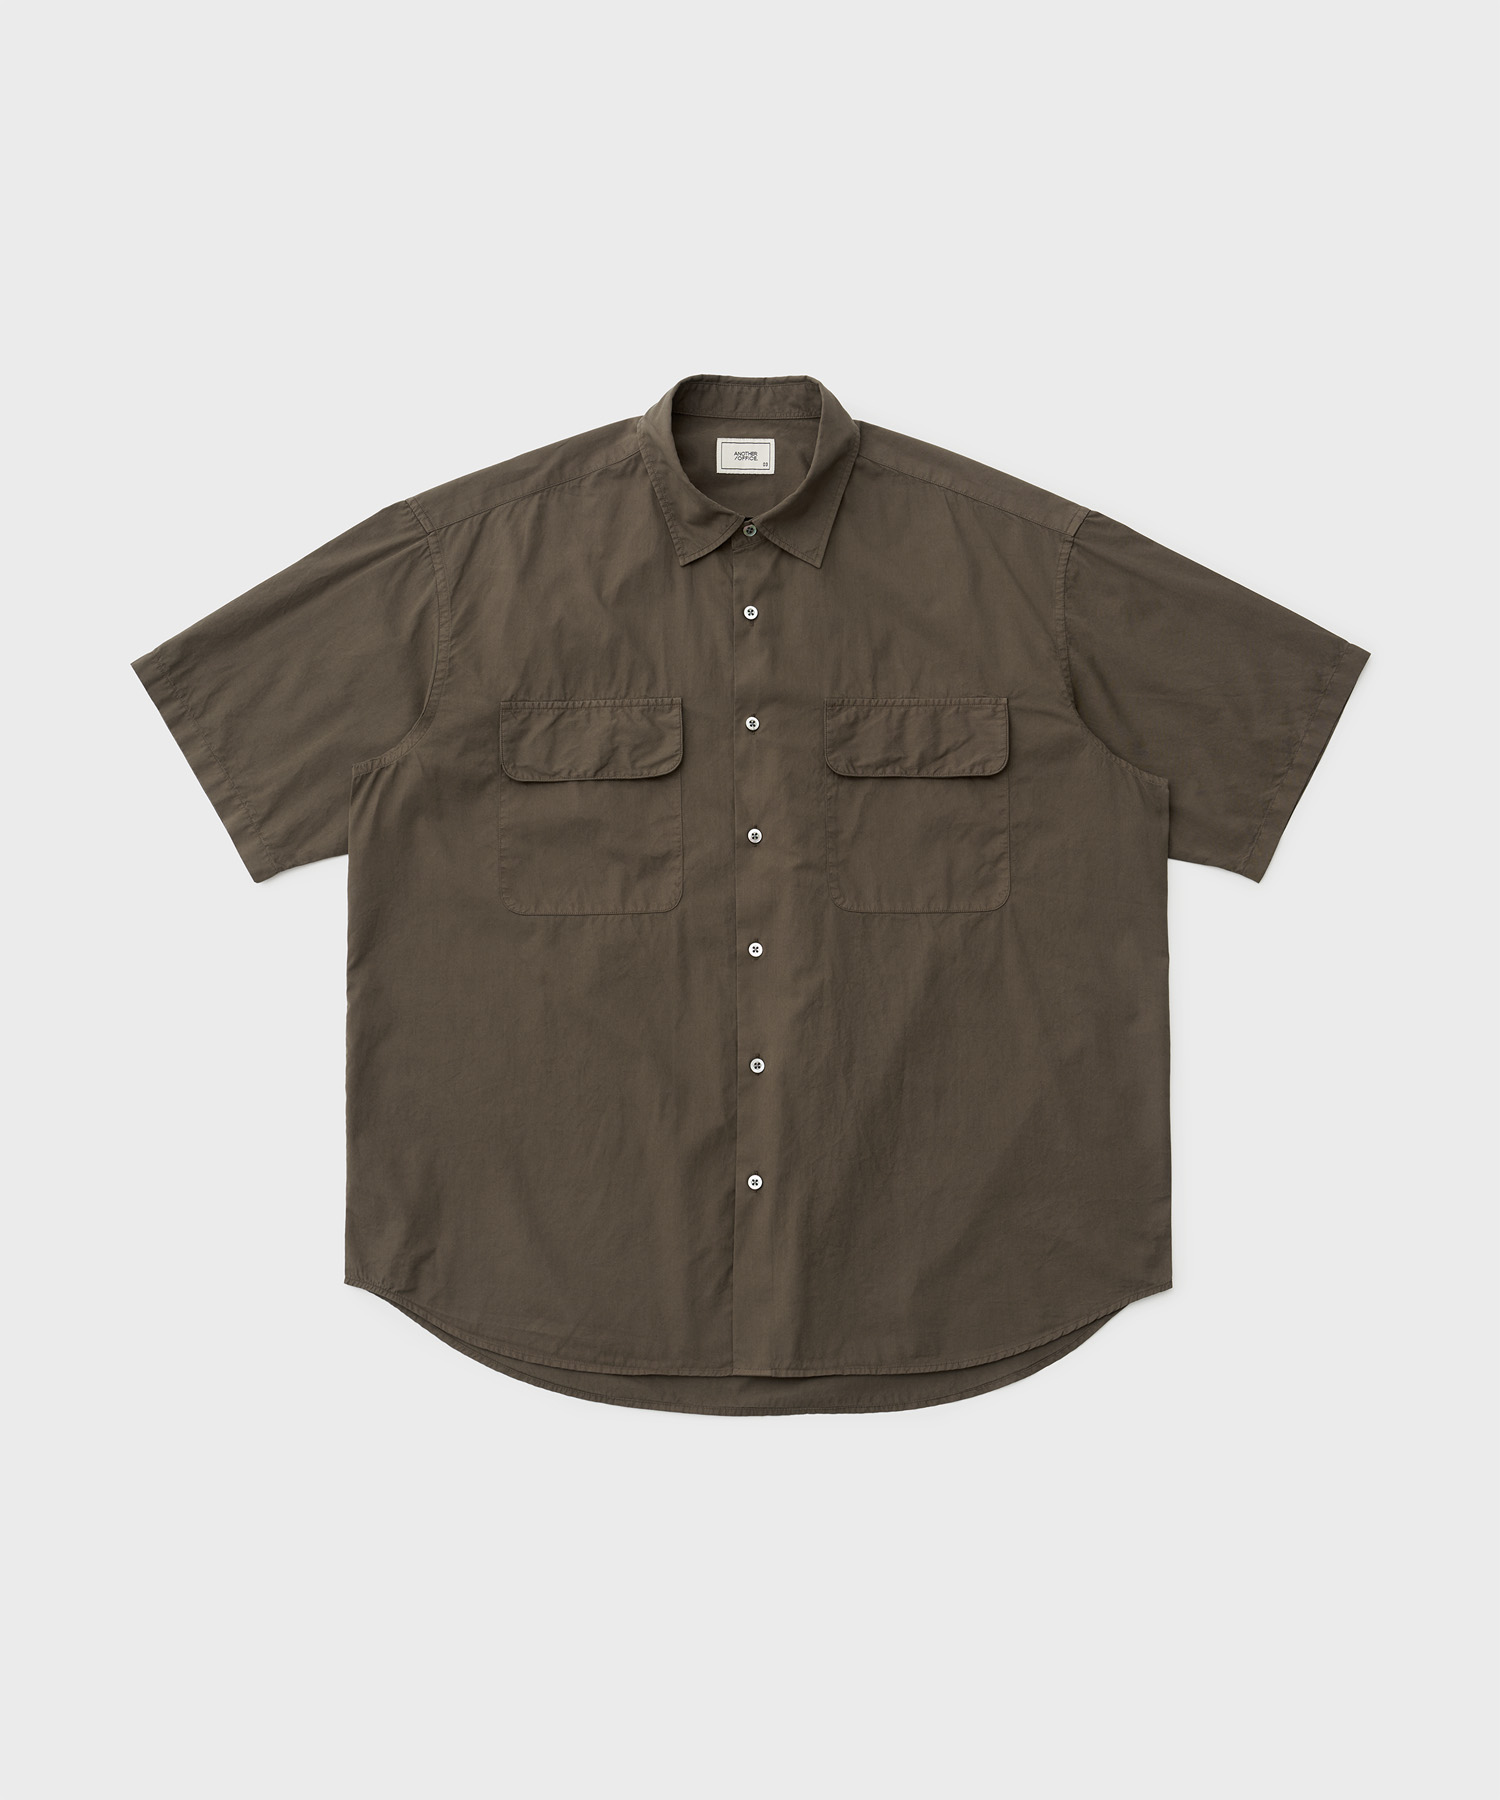 Volume Garment Shirt (Mild Brown)